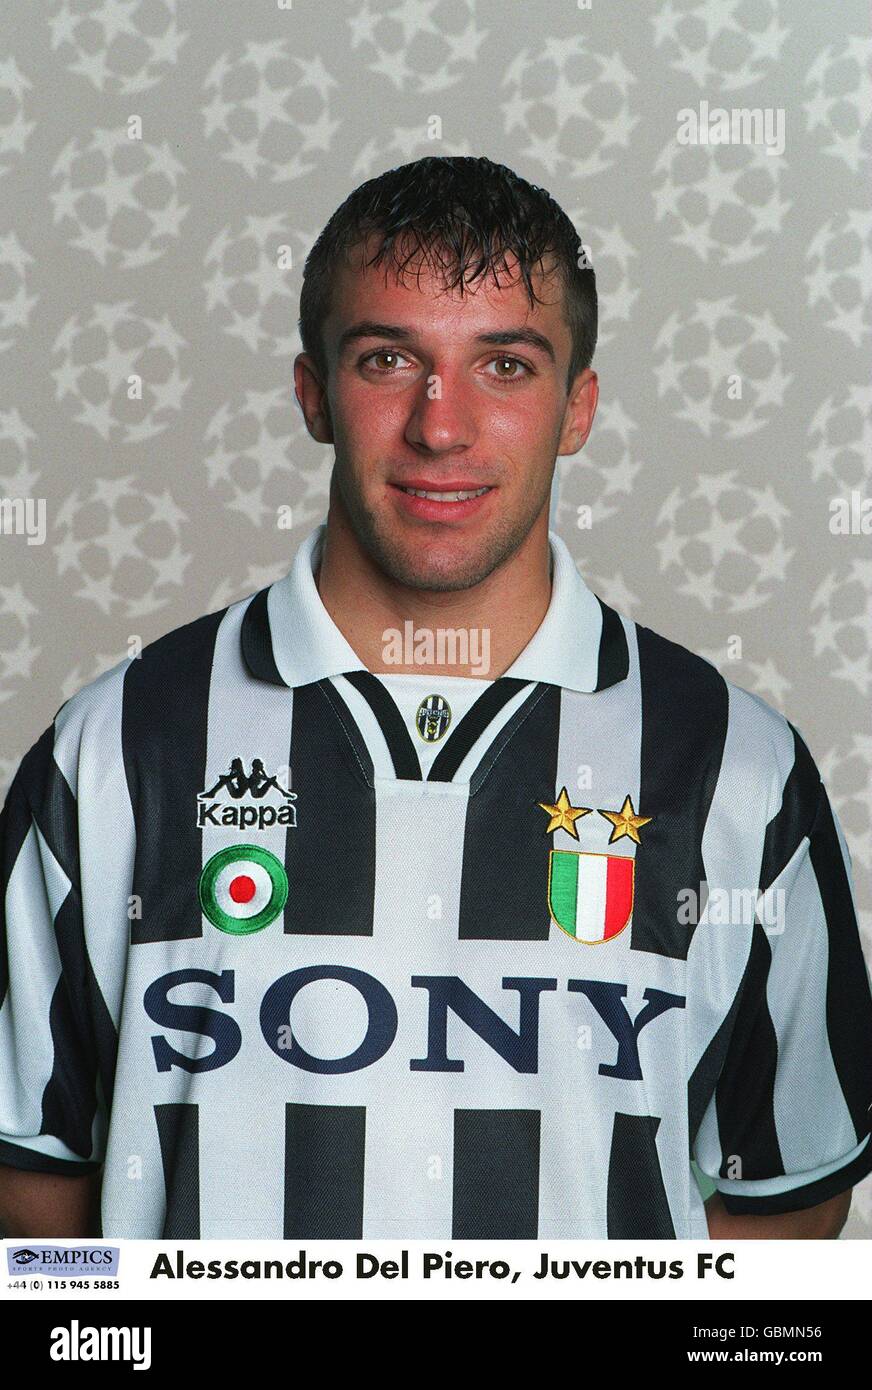 UEFA Champions League 1995/96 .... Alessandro del Piero, Juventus FC Foto  stock - Alamy